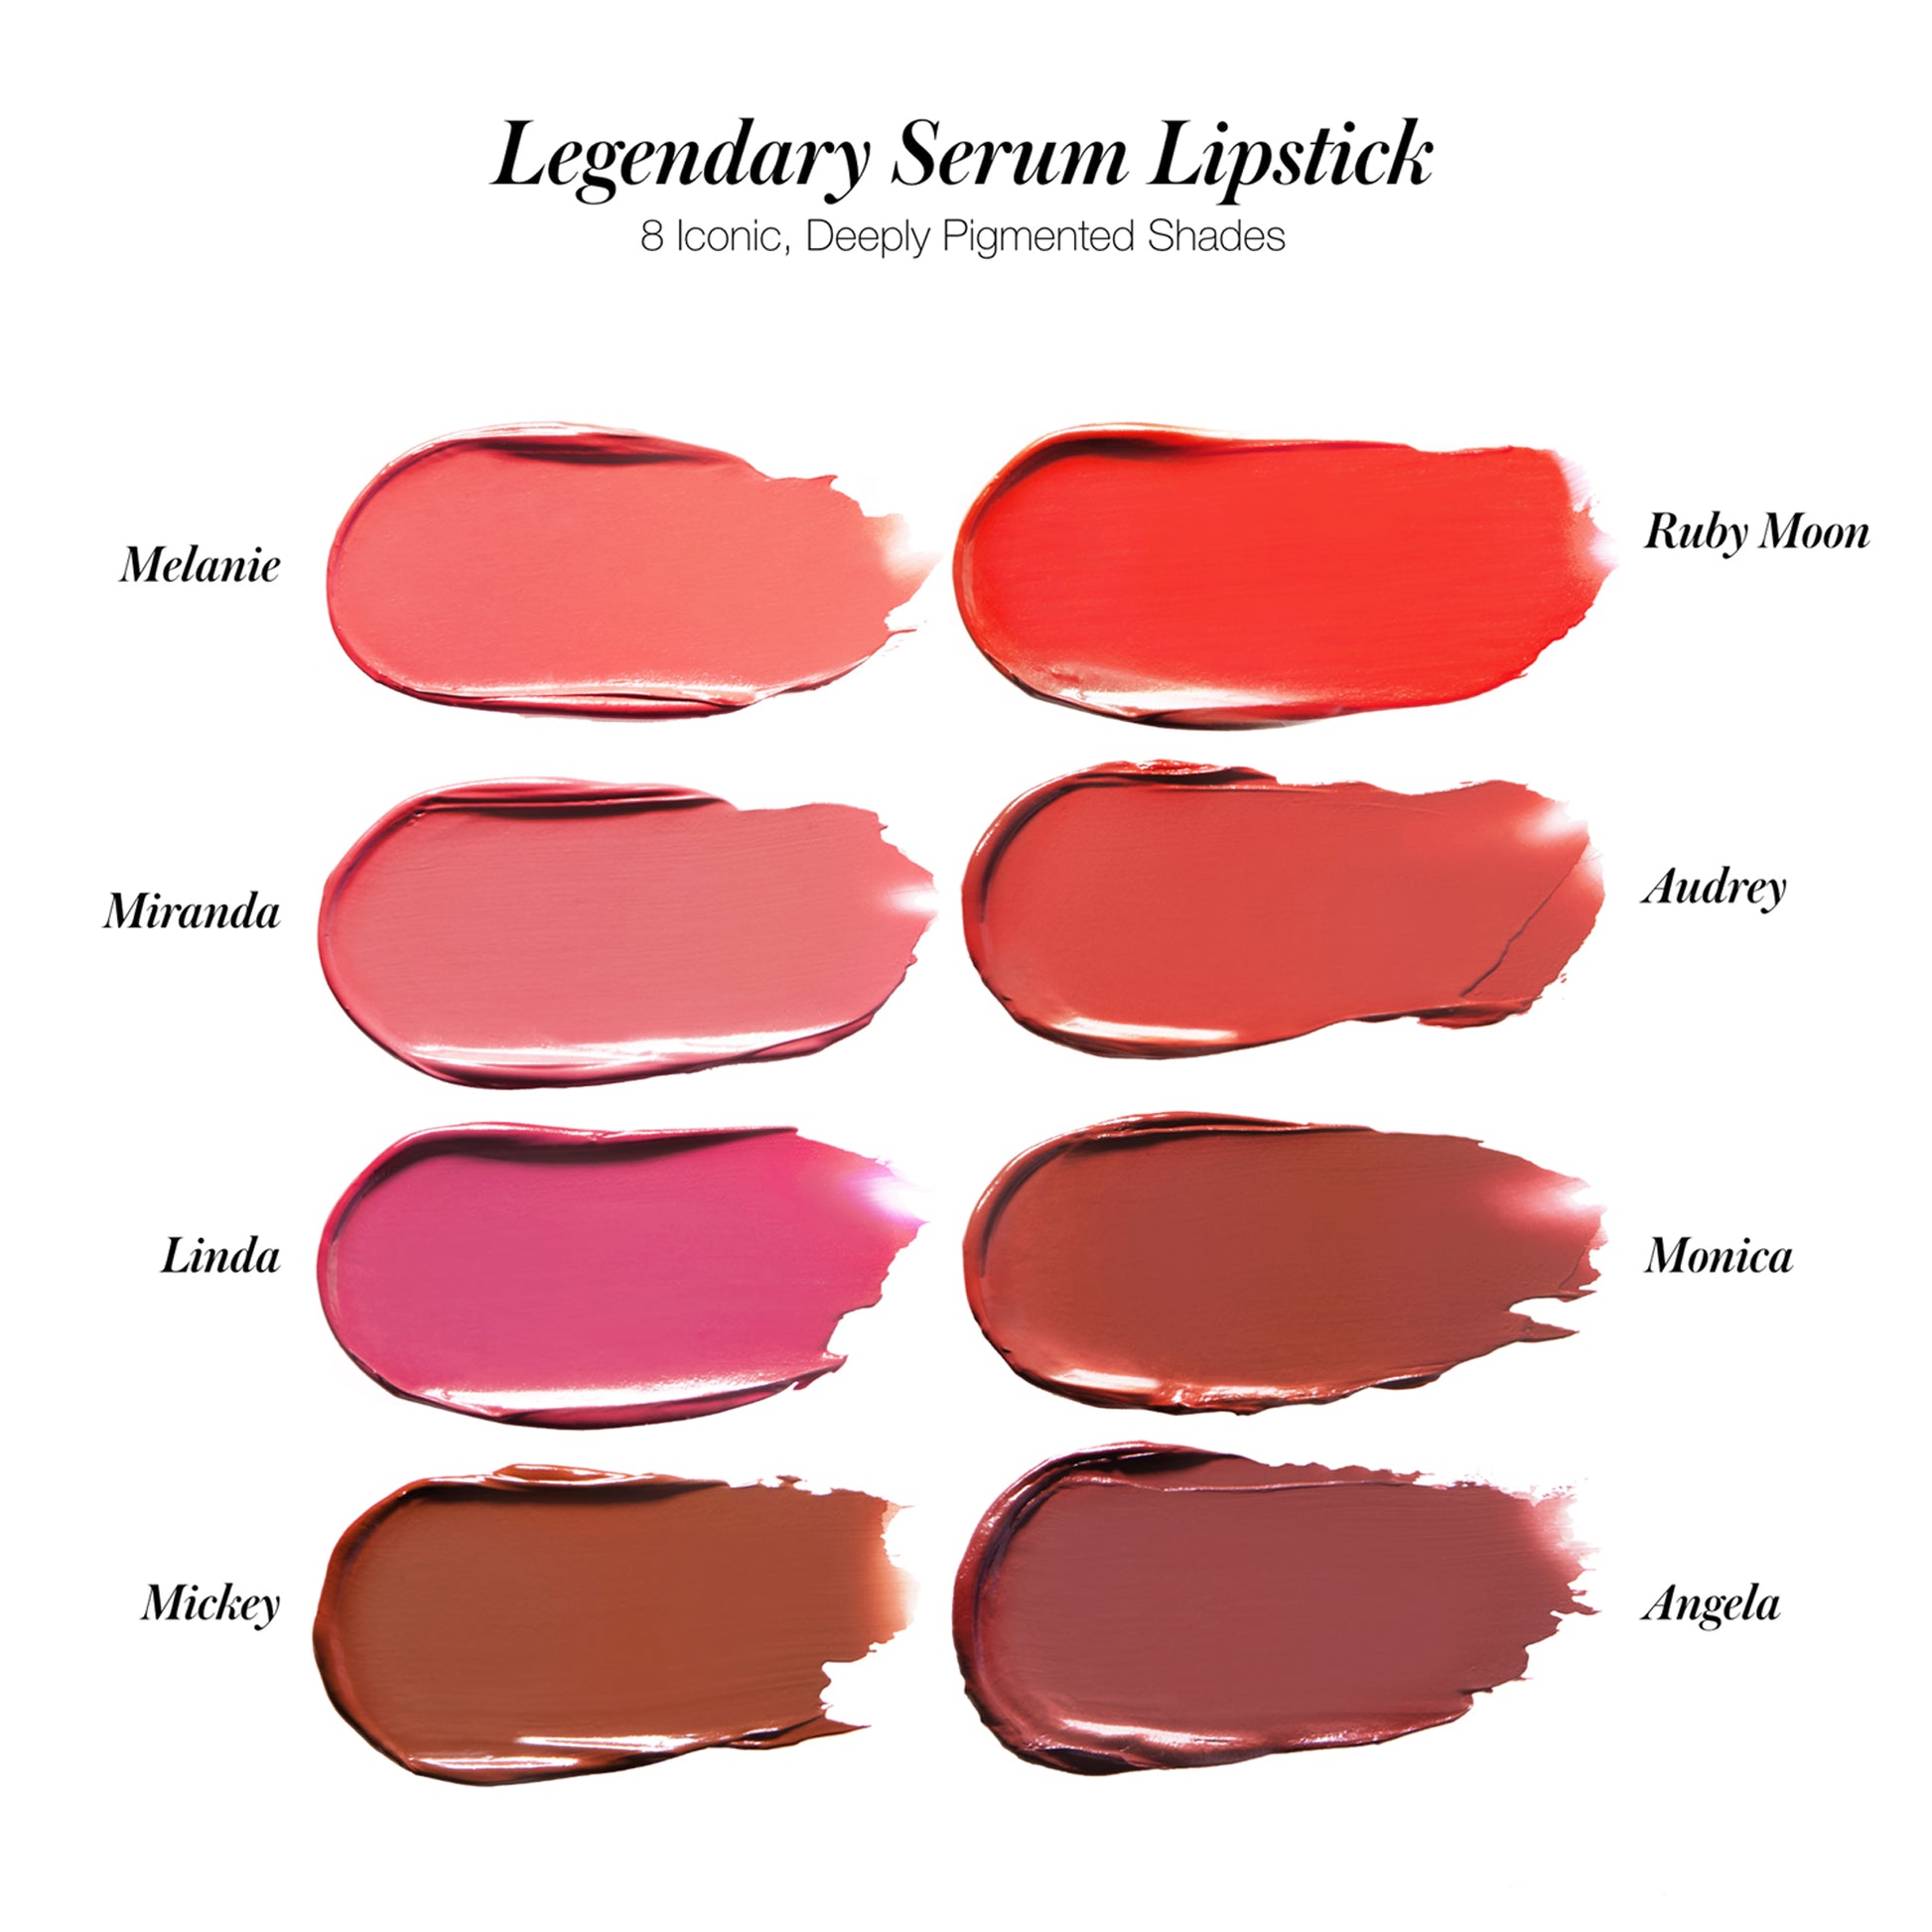 RMS BEAUTY Legendary Serum Lipstick ALWAYS SHOW